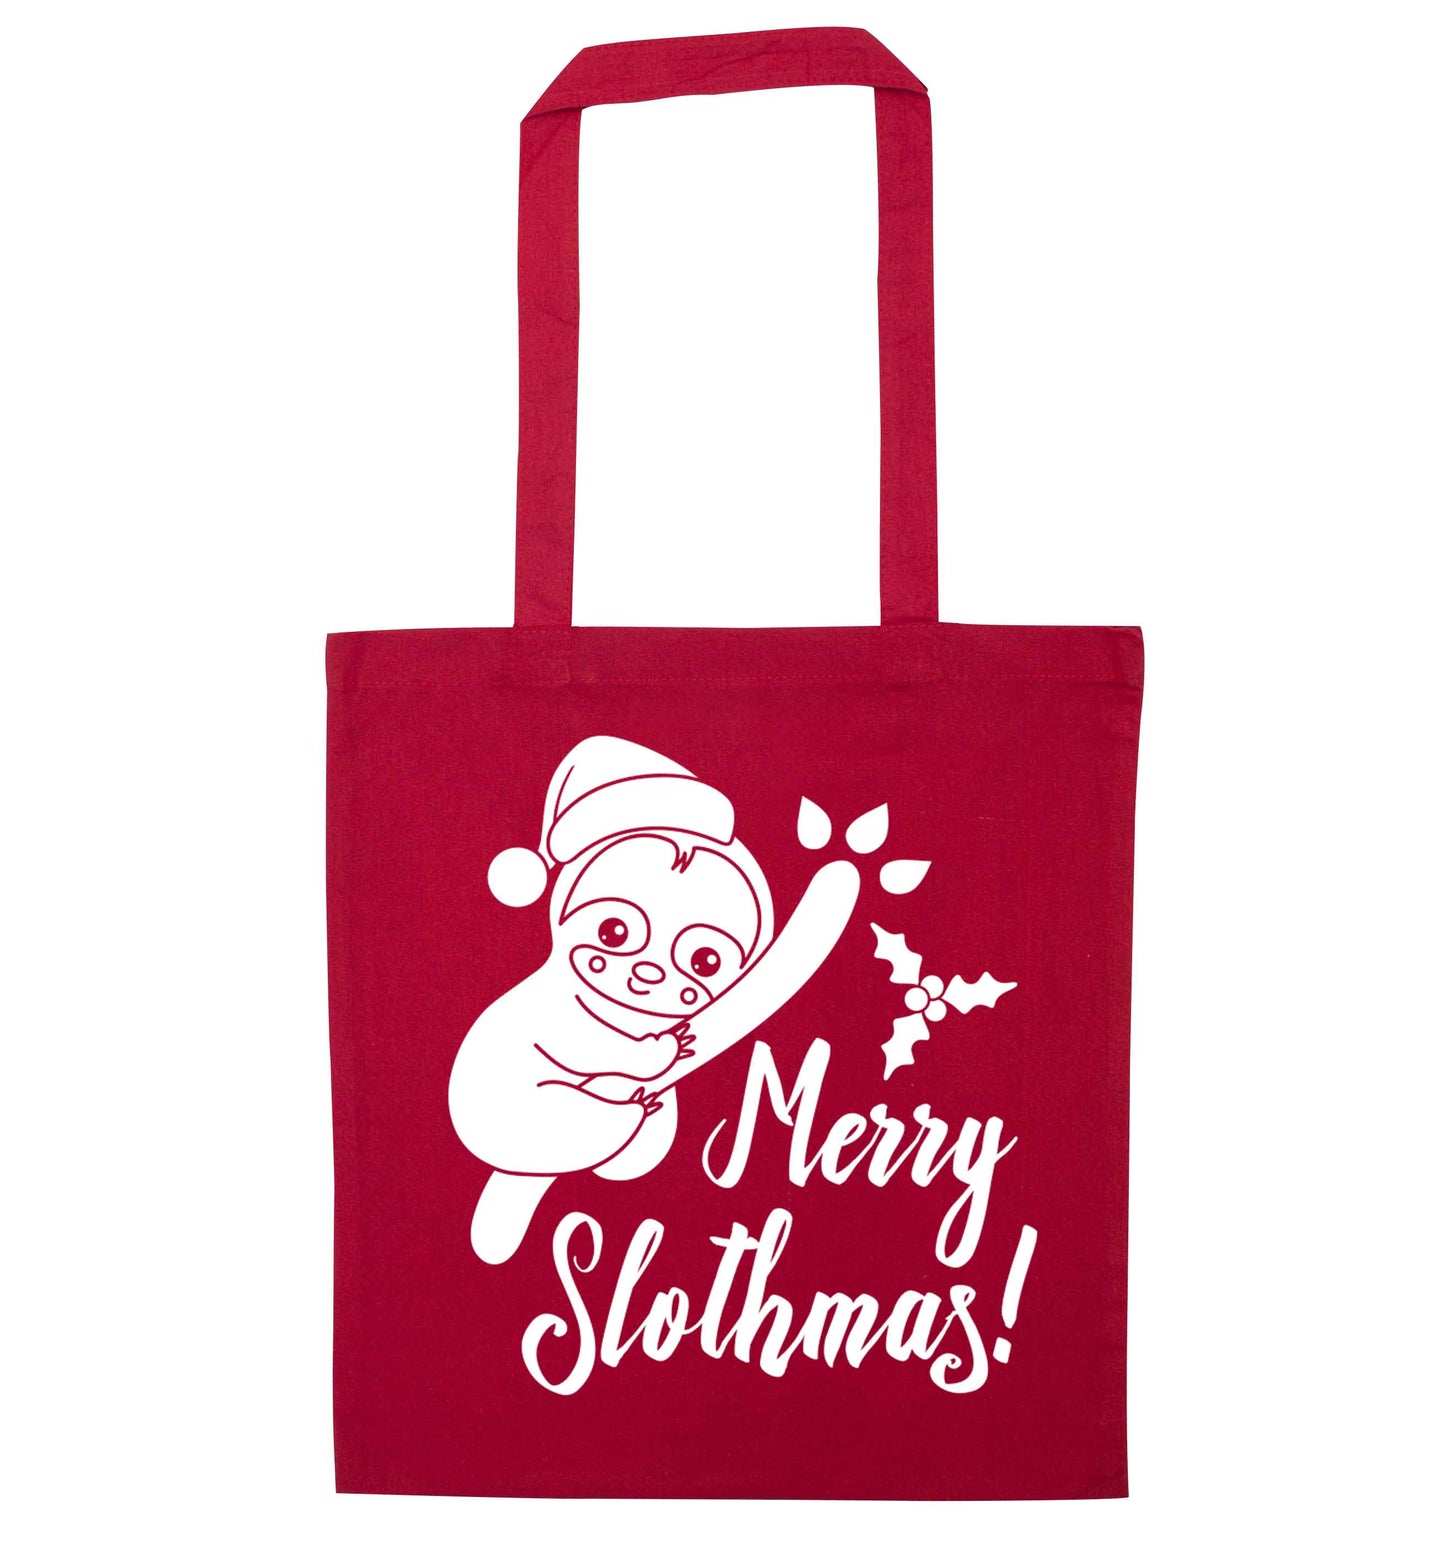 Merry Slothmas red tote bag